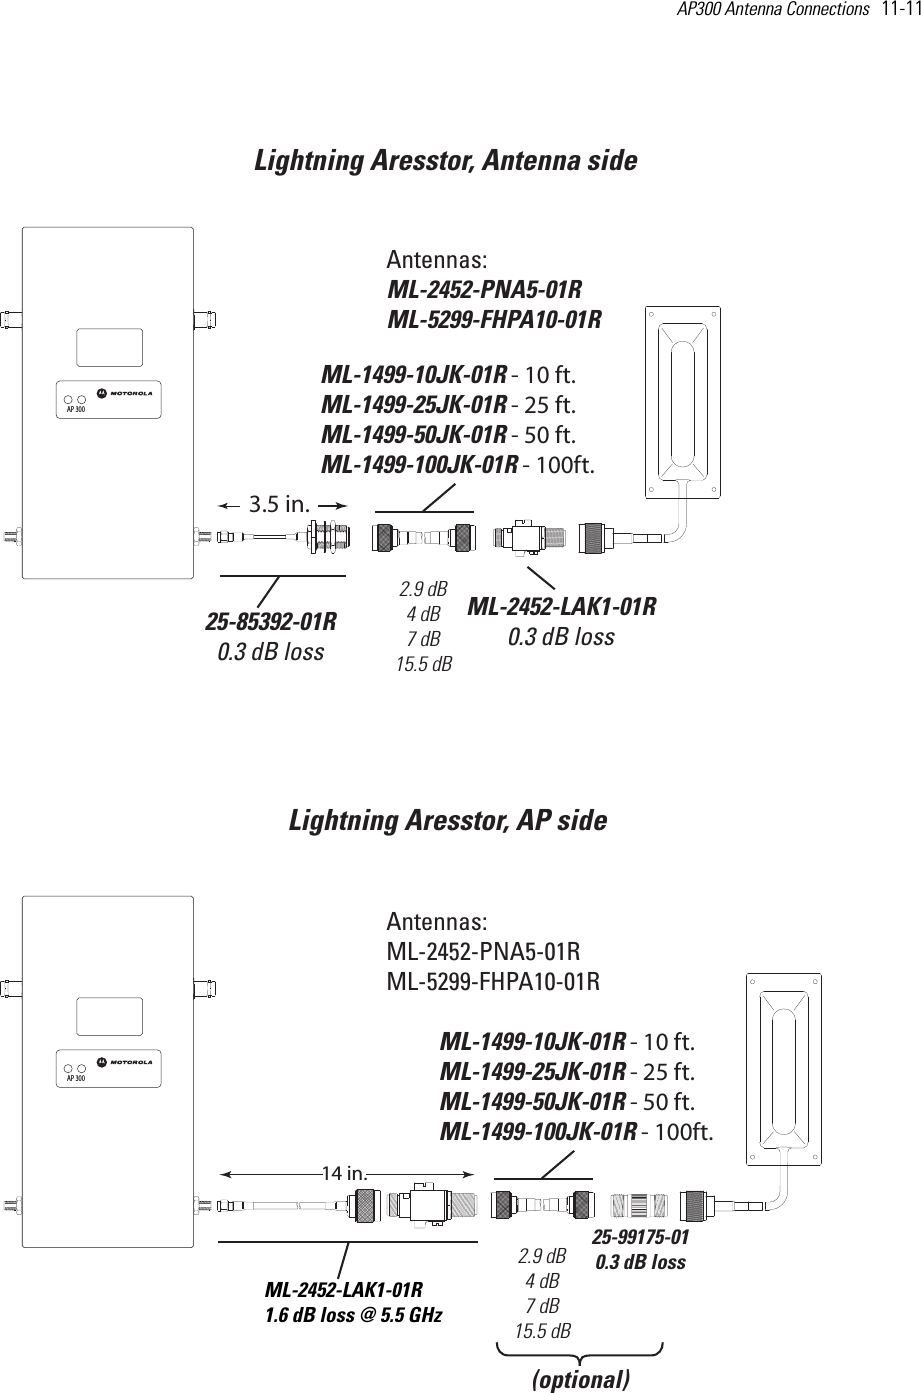 AP300 Antenna Connections   11-11 ML-2452-LAK1-01R0.3 dB lossAntennas:ML-2452-PNA5-01RML-5299-FHPA10-01RAntennas:ML-2452-PNA5-01RML-5299-FHPA10-01R25-99175-010.3 dB lossLightning Aresstor, AP sideLightning Aresstor, Antenna side25-85392-01R0.3 dB loss3.5 in.ML-2452-LAK1-01R1.6 dB loss @ 5.5 GHz14 in. ML-1499-10JK-01R - 10 ft.ML-1499-25JK-01R - 25 ft.ML-1499-50JK-01R - 50 ft.ML-1499-100JK-01R - 100ft. 2.9 dB4 dB7 dB15.5 dBML-1499-10JK-01R - 10 ft.ML-1499-25JK-01R - 25 ft.ML-1499-50JK-01R - 50 ft.ML-1499-100JK-01R - 100ft. 2.9 dB4 dB7 dB15.5 dBAP 300AP 300(optional)